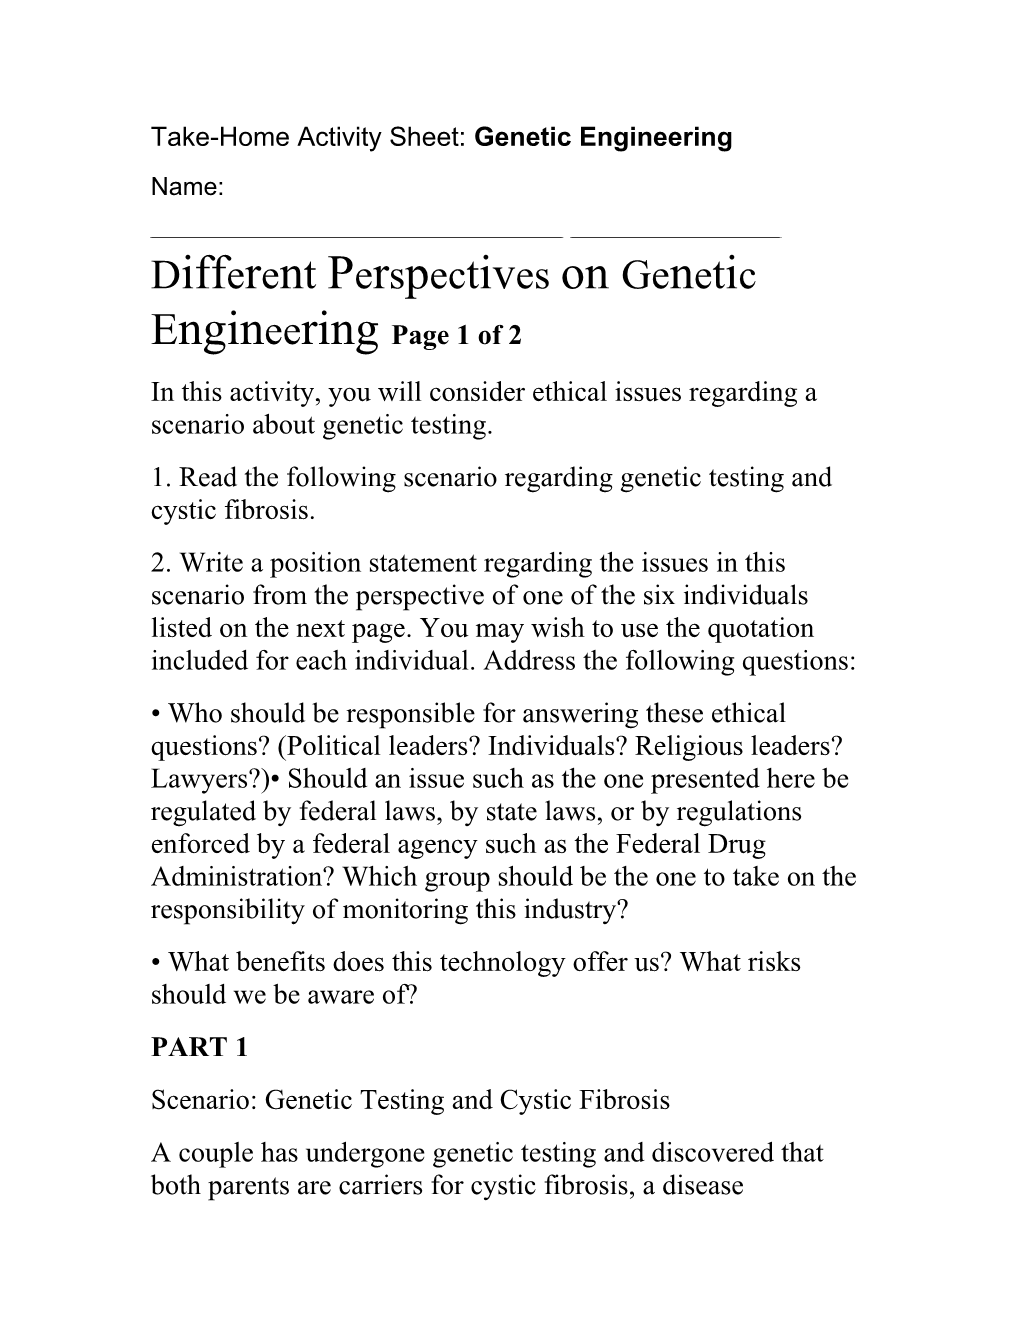 Take-Home Activity Sheet: Genetic Engineering